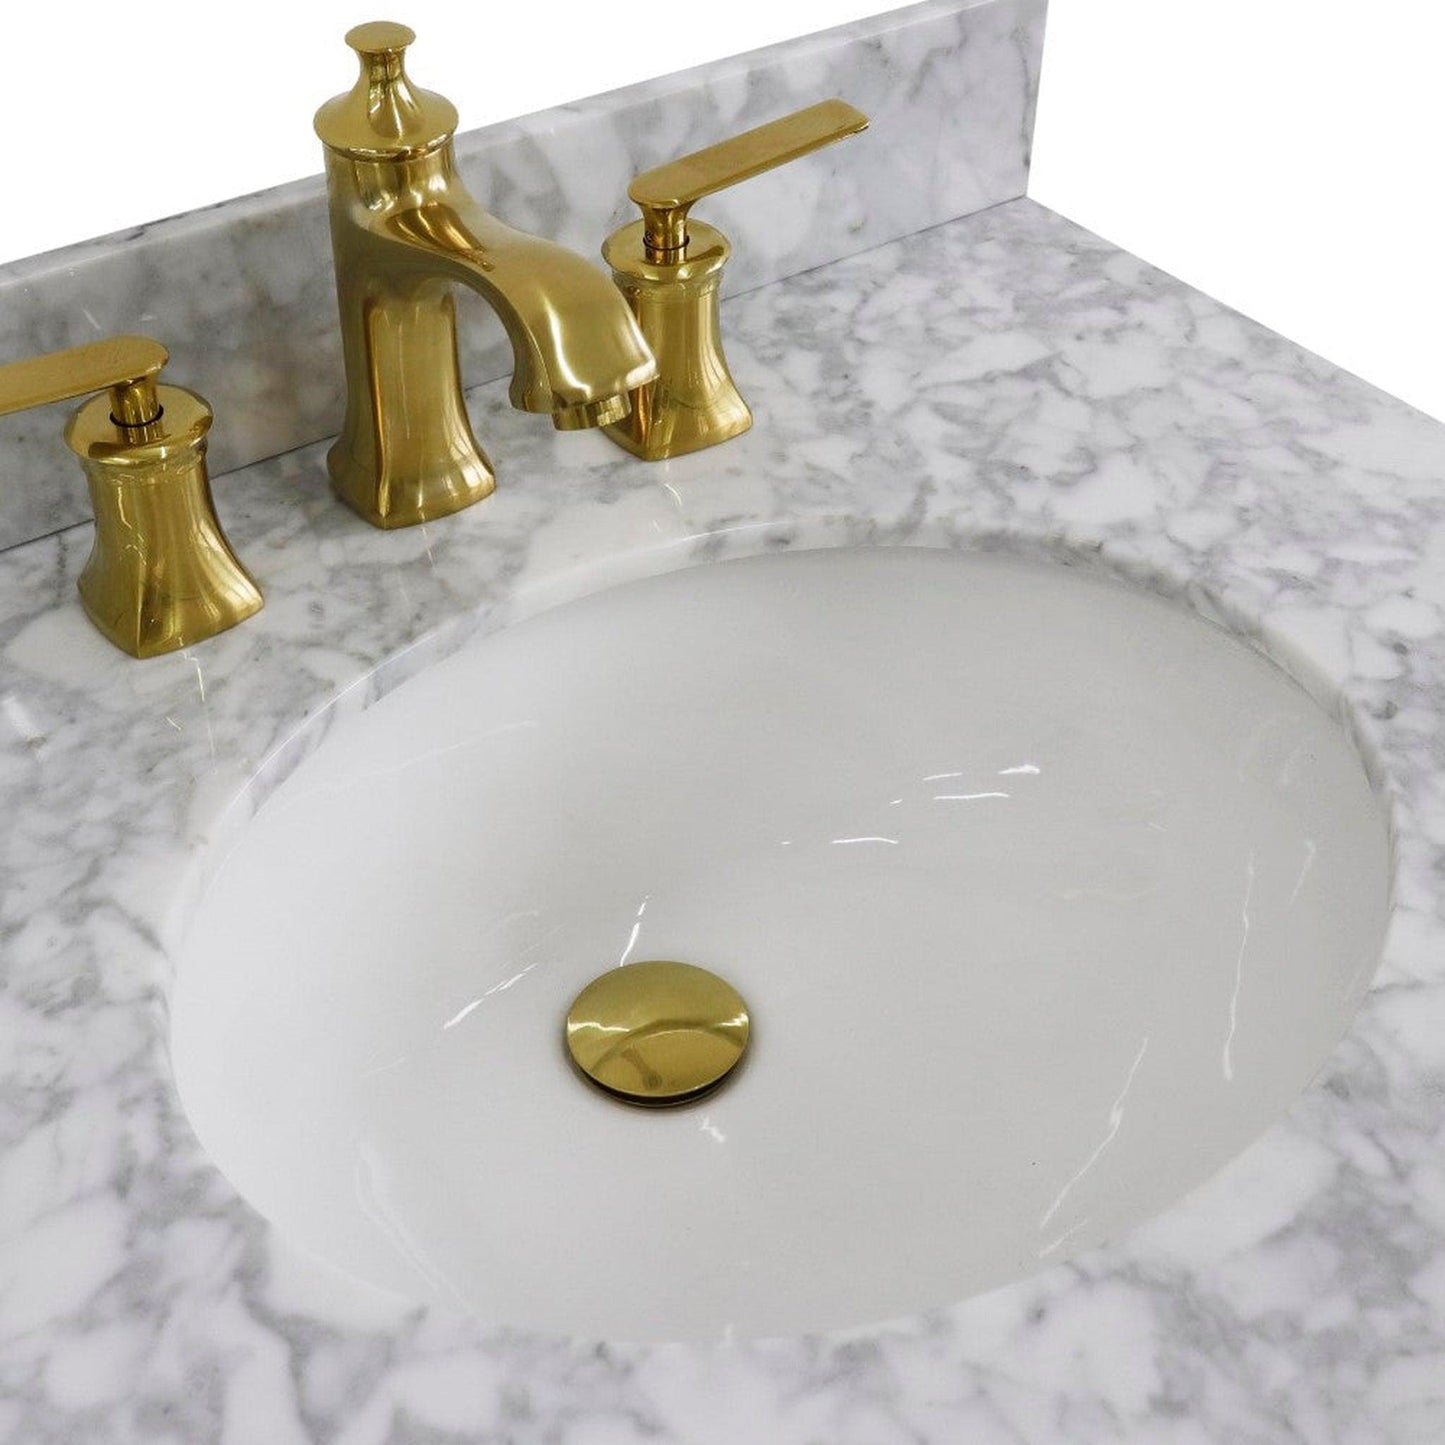 Bellaterra Home Forli 61" 4-Door 3-Drawer Dark Gray Freestanding Vanity Set With Ceramic Double Undermount Oval Sink and White Carrara Marble Top